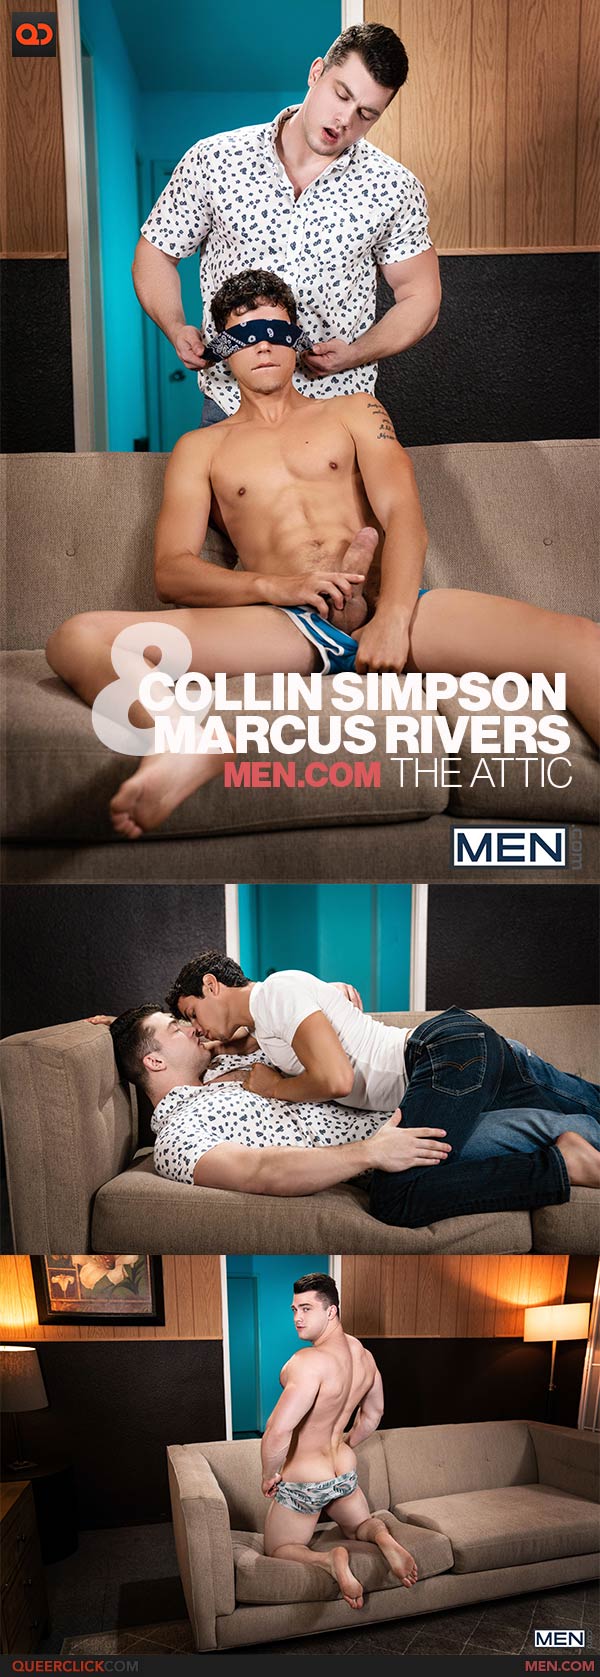 Men.com: Collin Simpson and Kaleb Stryker